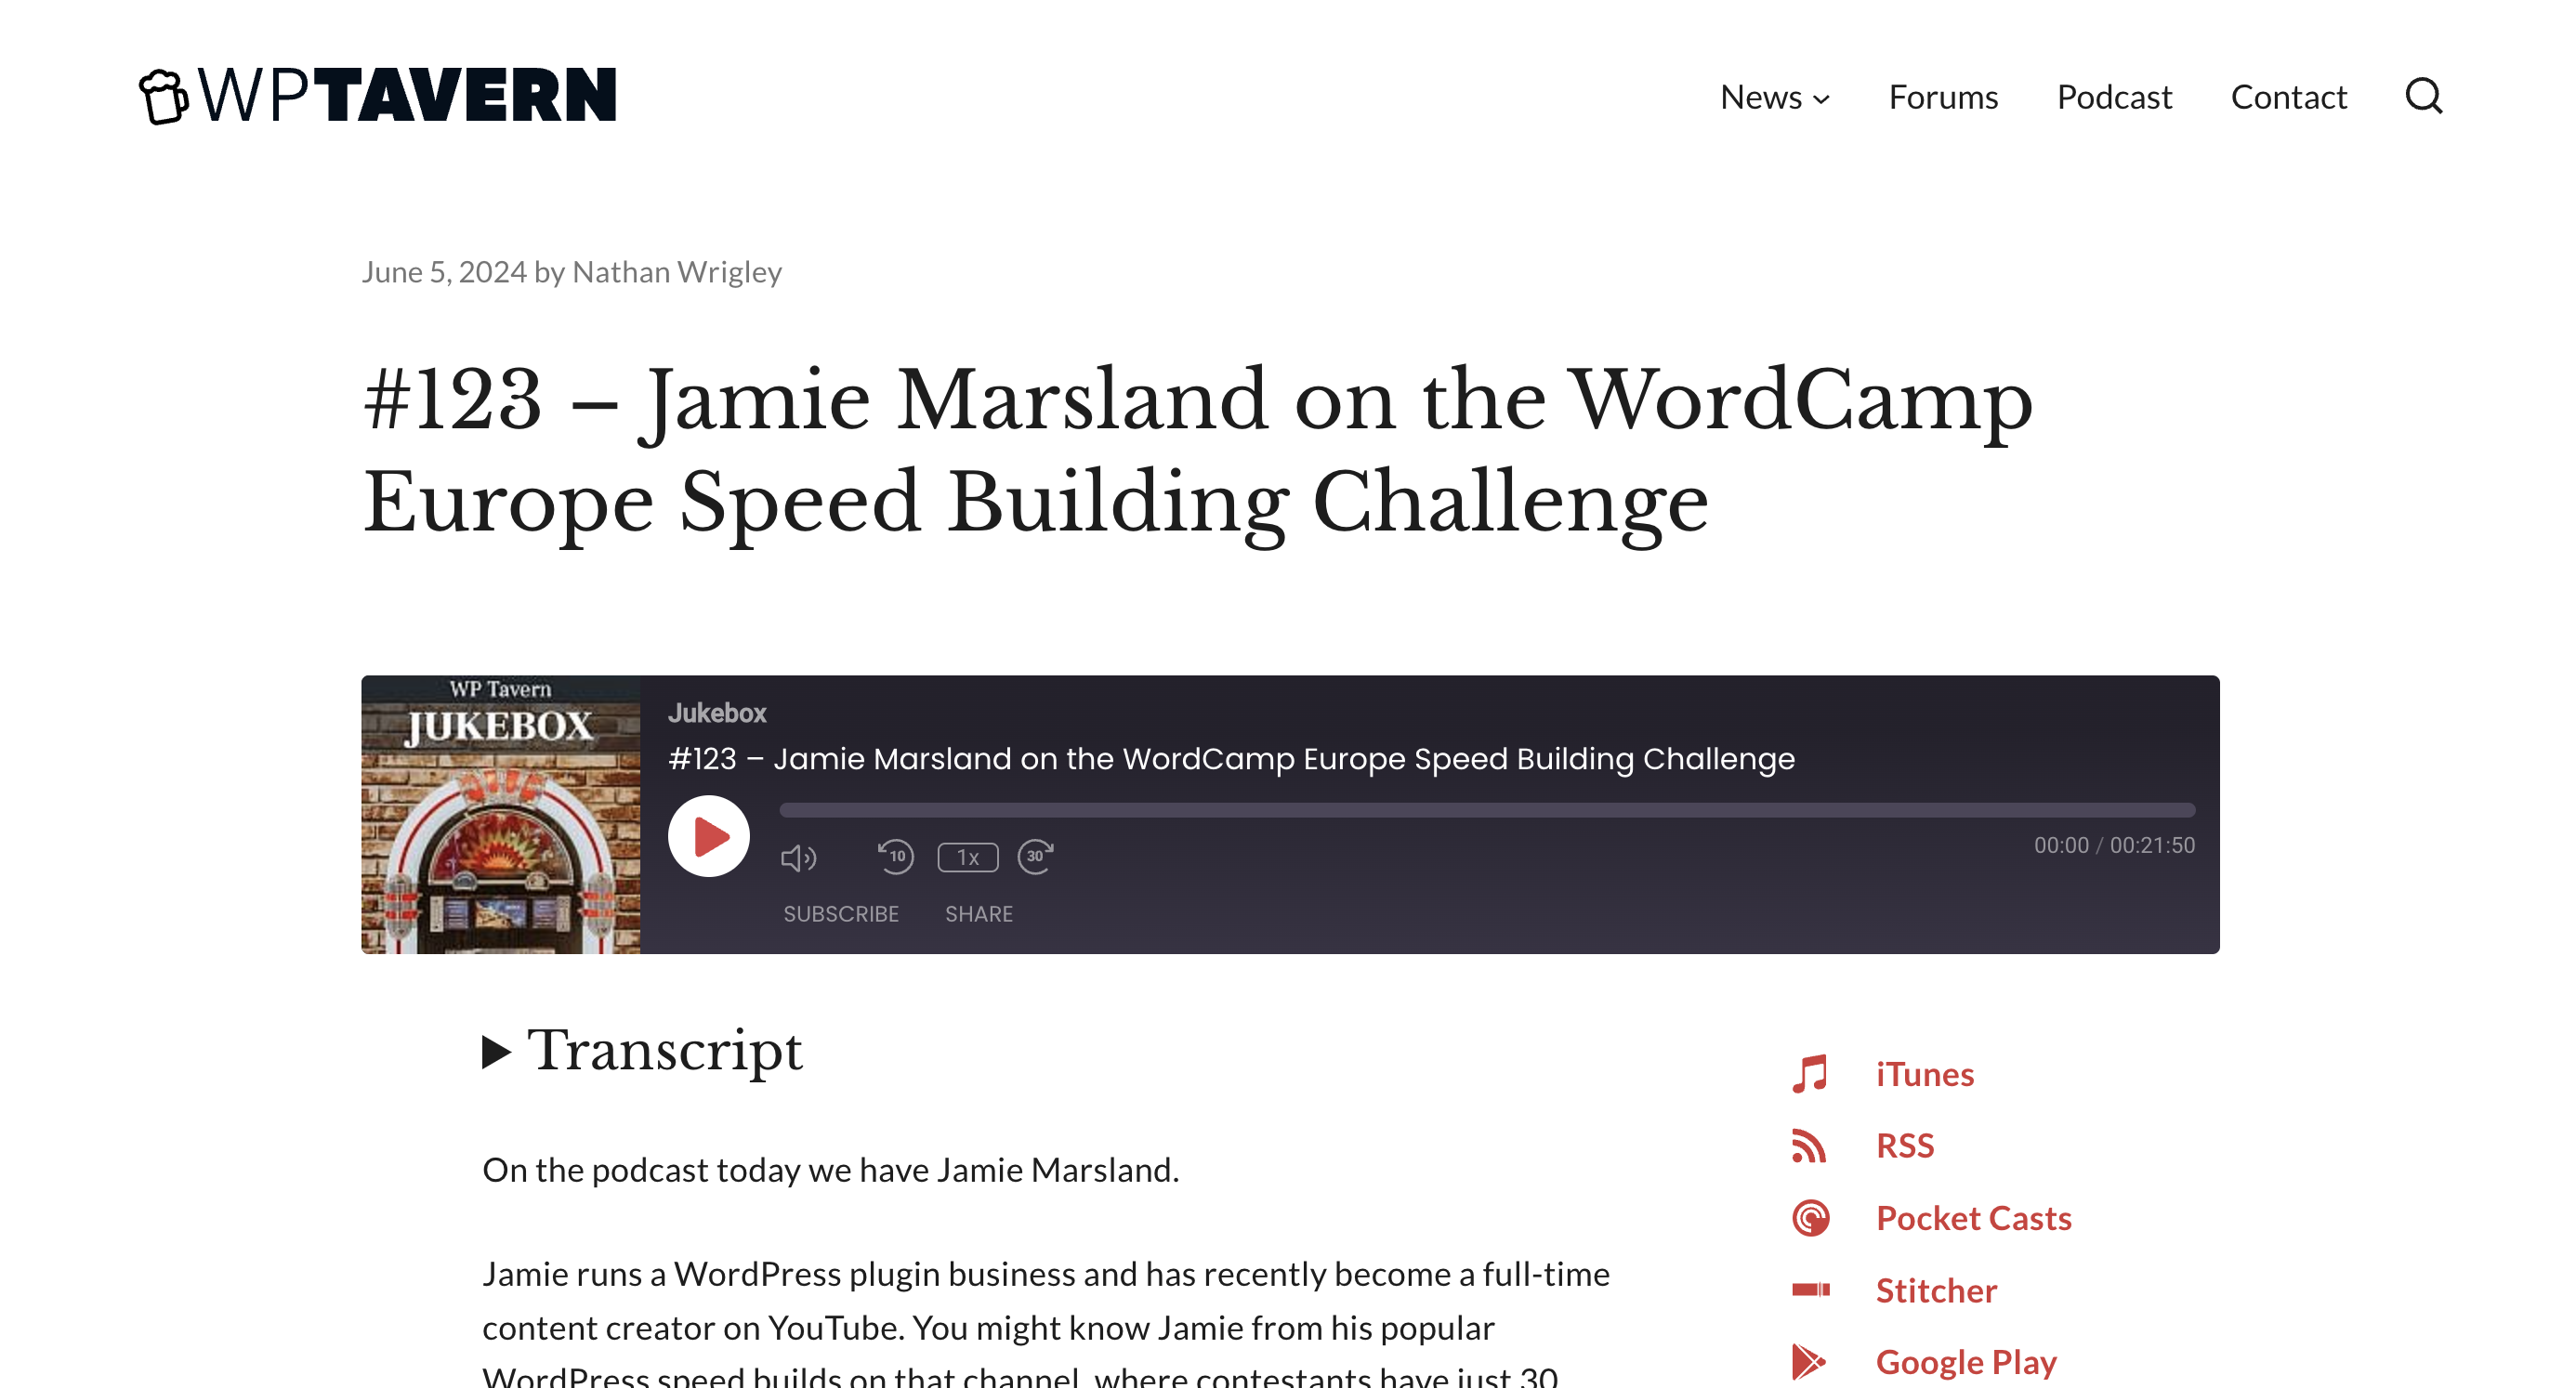 The WordPress Speed Build Challenge comes to WordCamp Europe